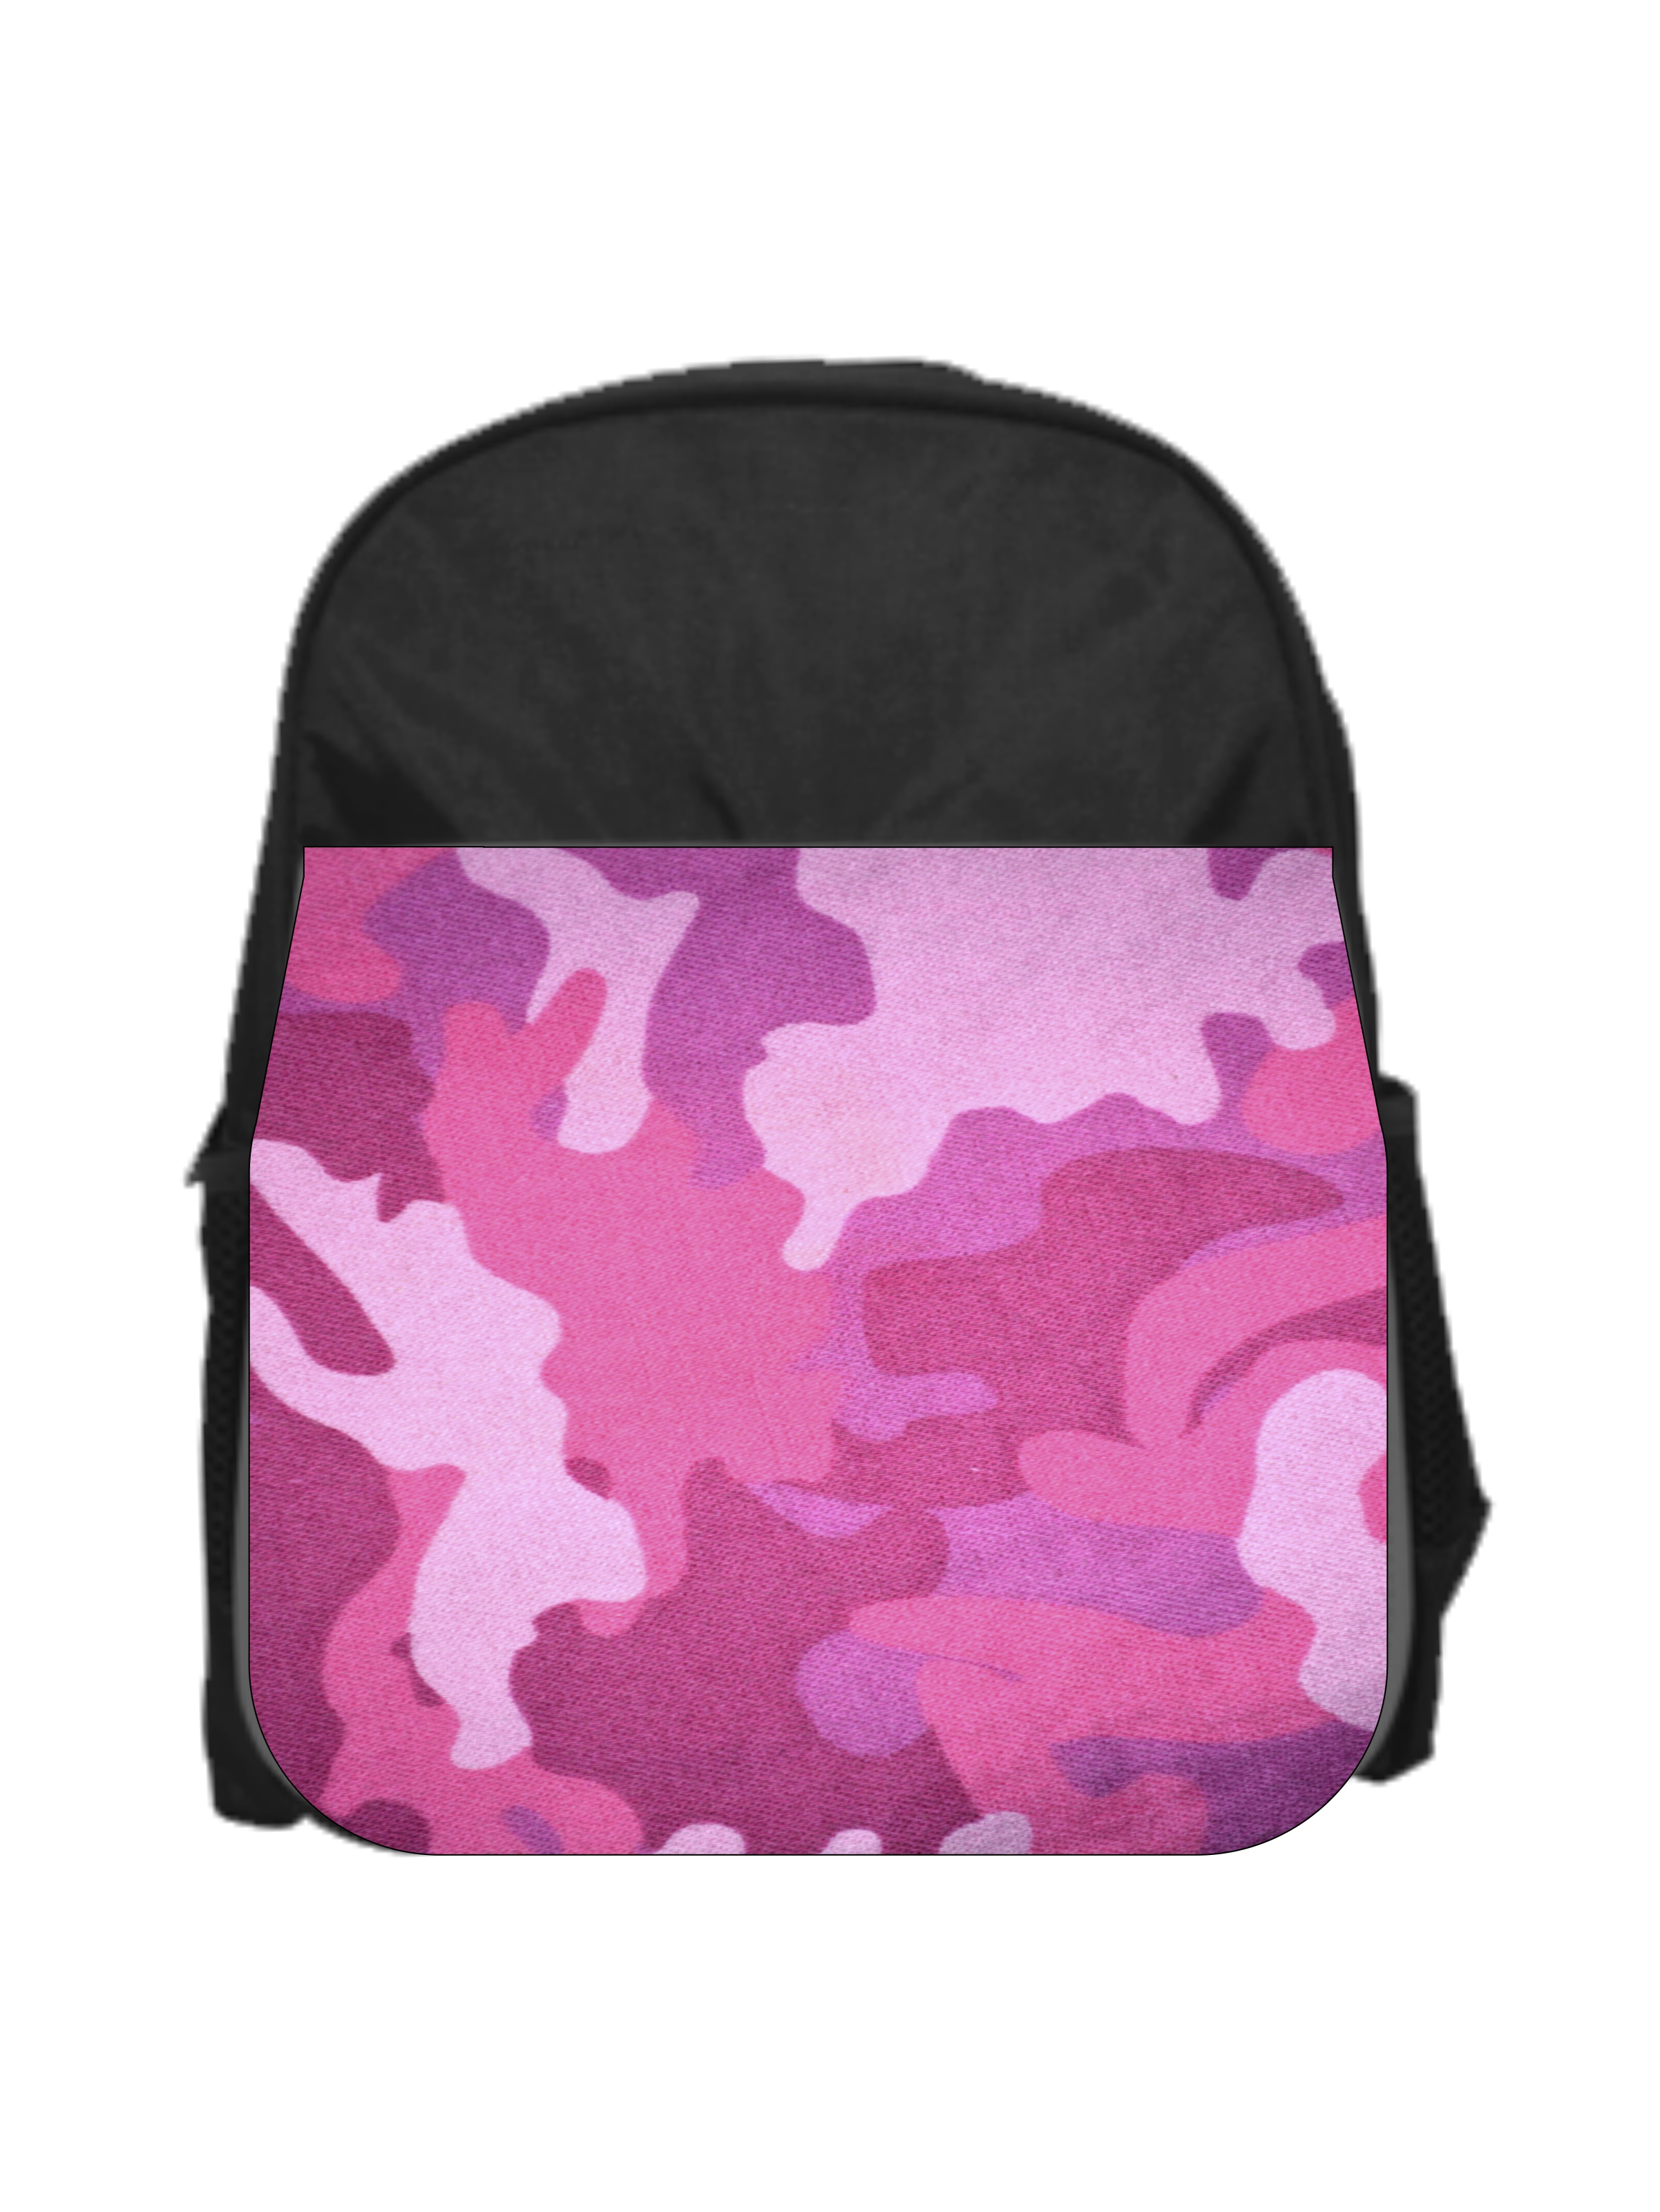 Pink Camo - Girls 13" x 10" Black Preschool Toddler Children's Backpack - image 1 of 2